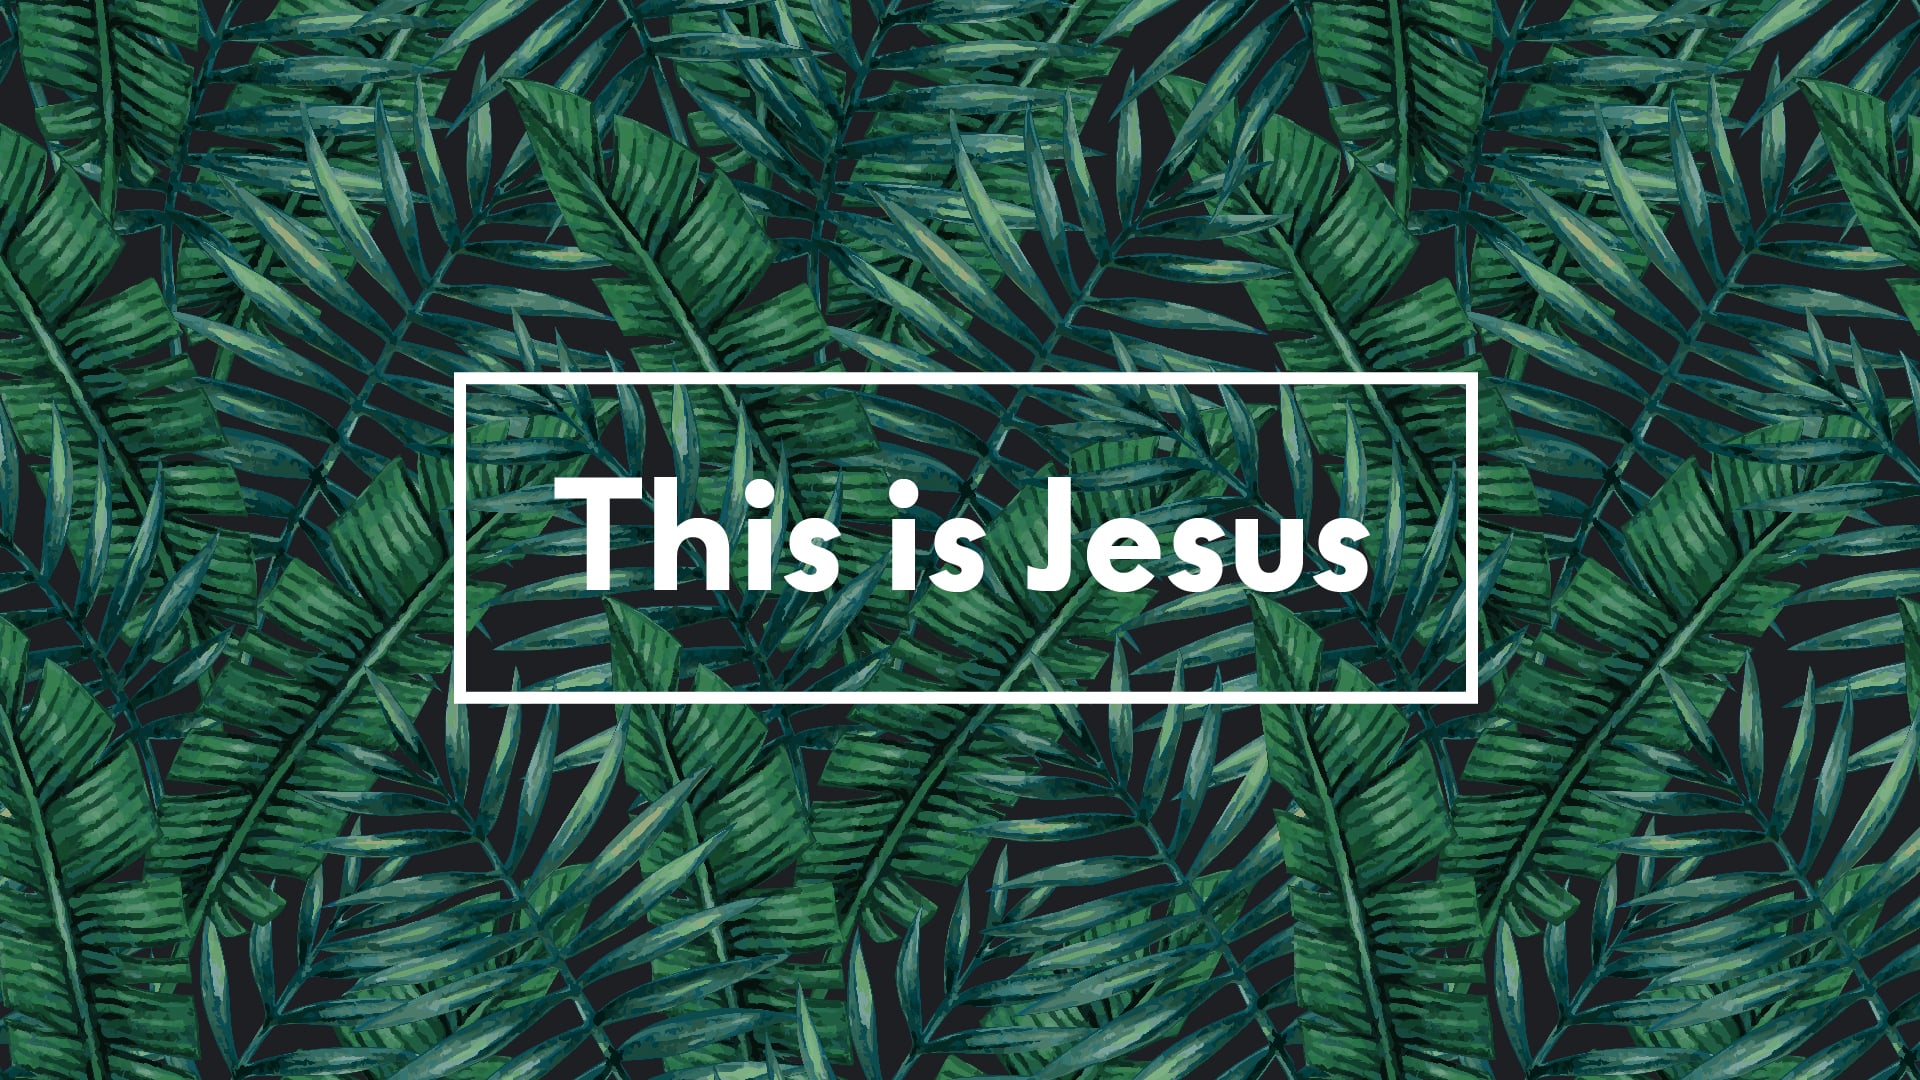 Palm Sunday 2021: This is Jesus